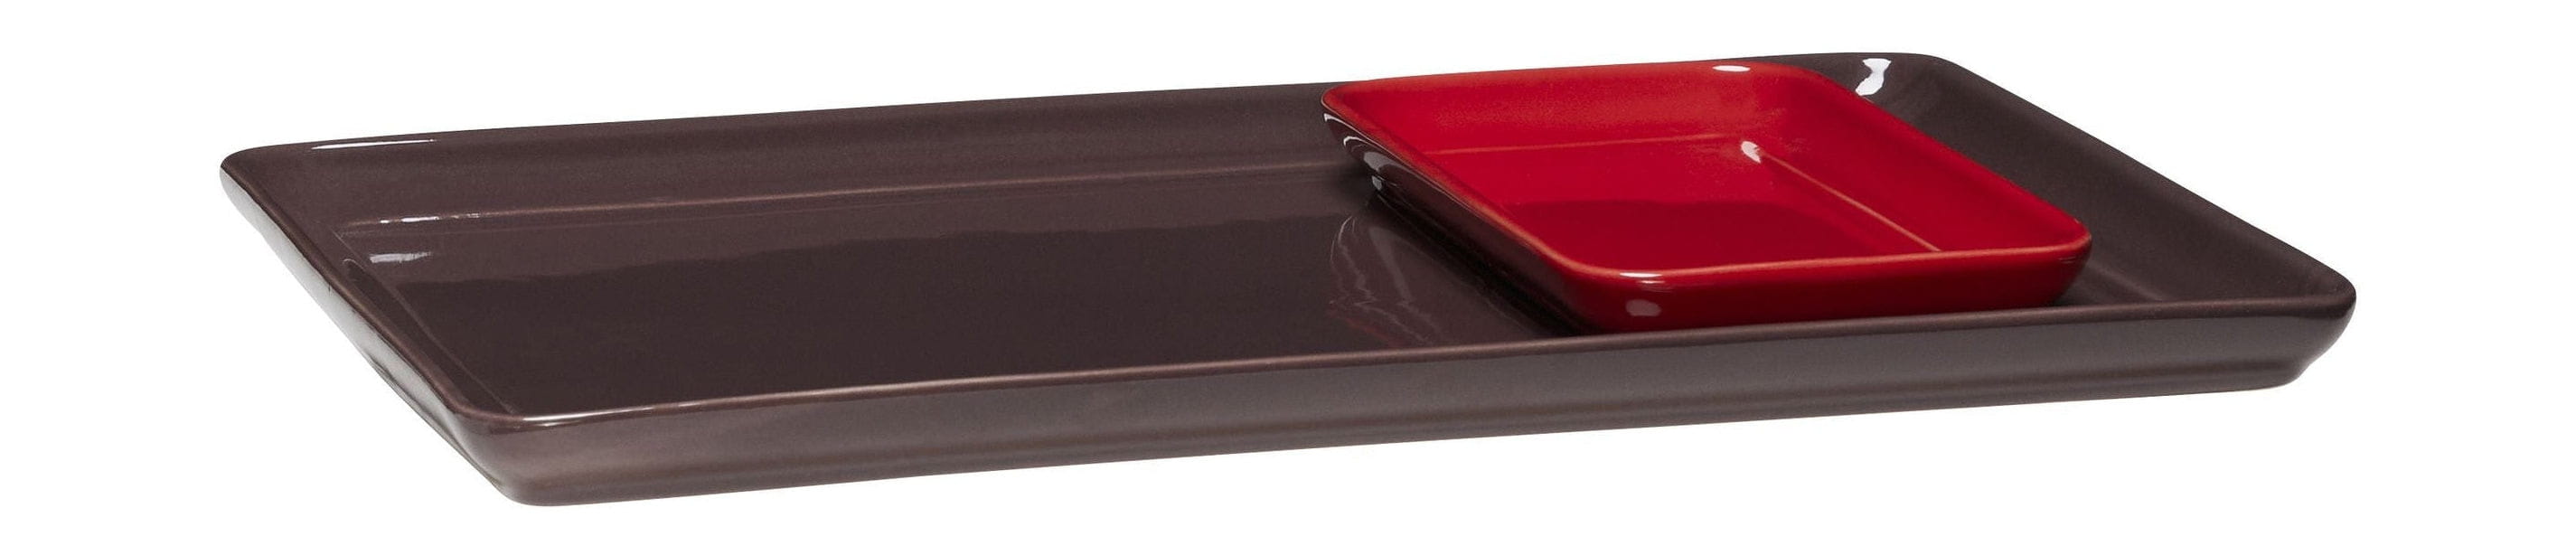 Hübsch Amare Tablett Set di 2, Borgogna/Rosso